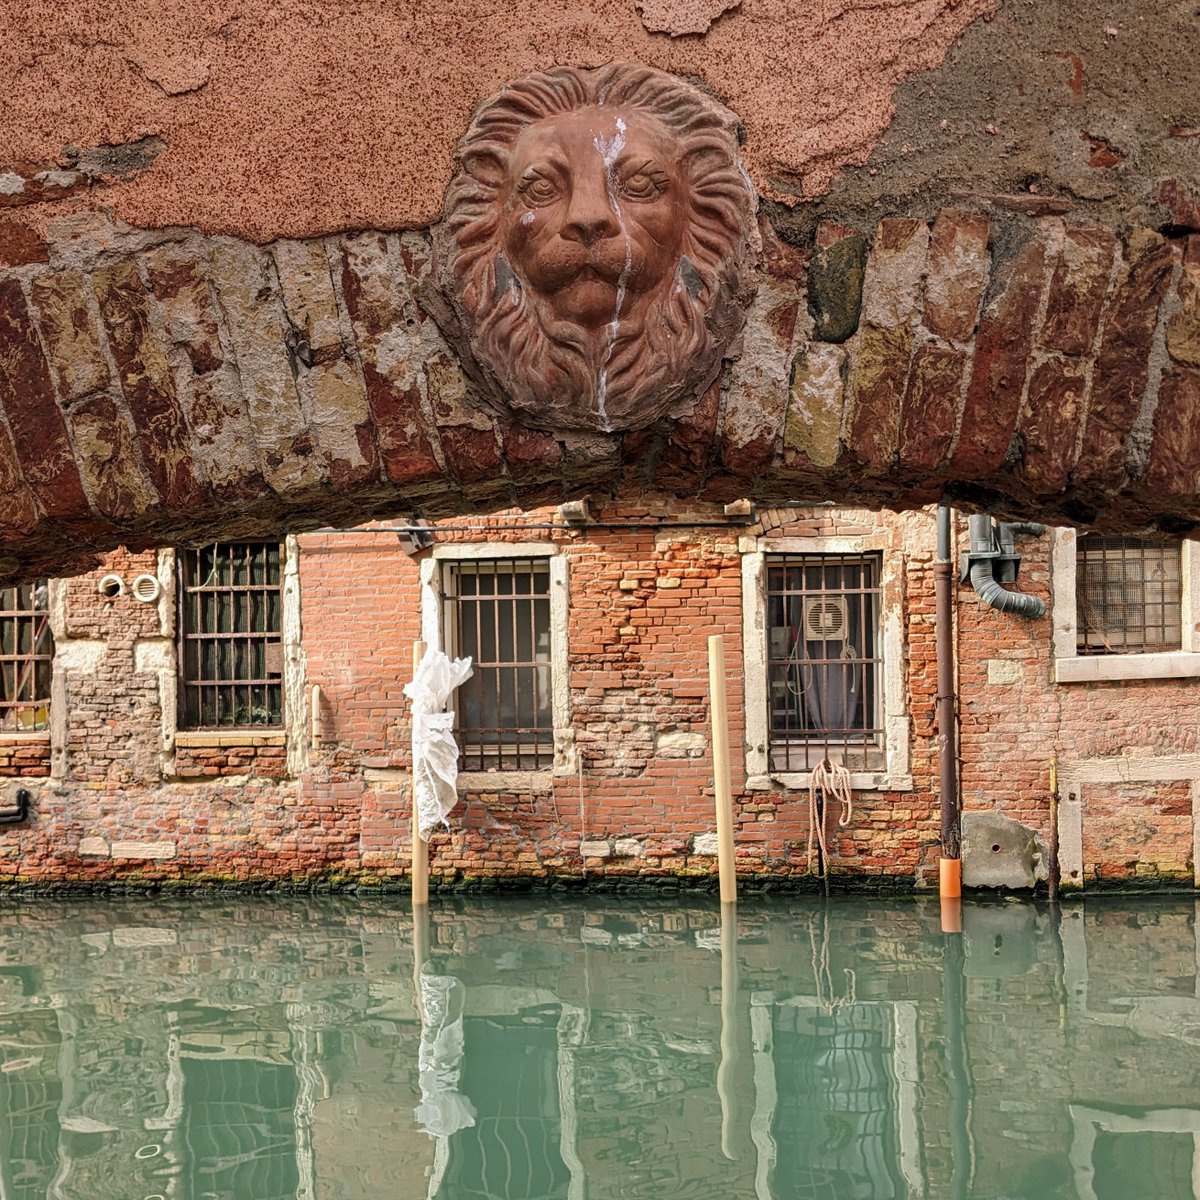 Leone in tondo #venezia #venice #veneziagram #veneziaunica #igersvenezia #veneziadavivere #travelphotography #venise #picoftheday #architecture